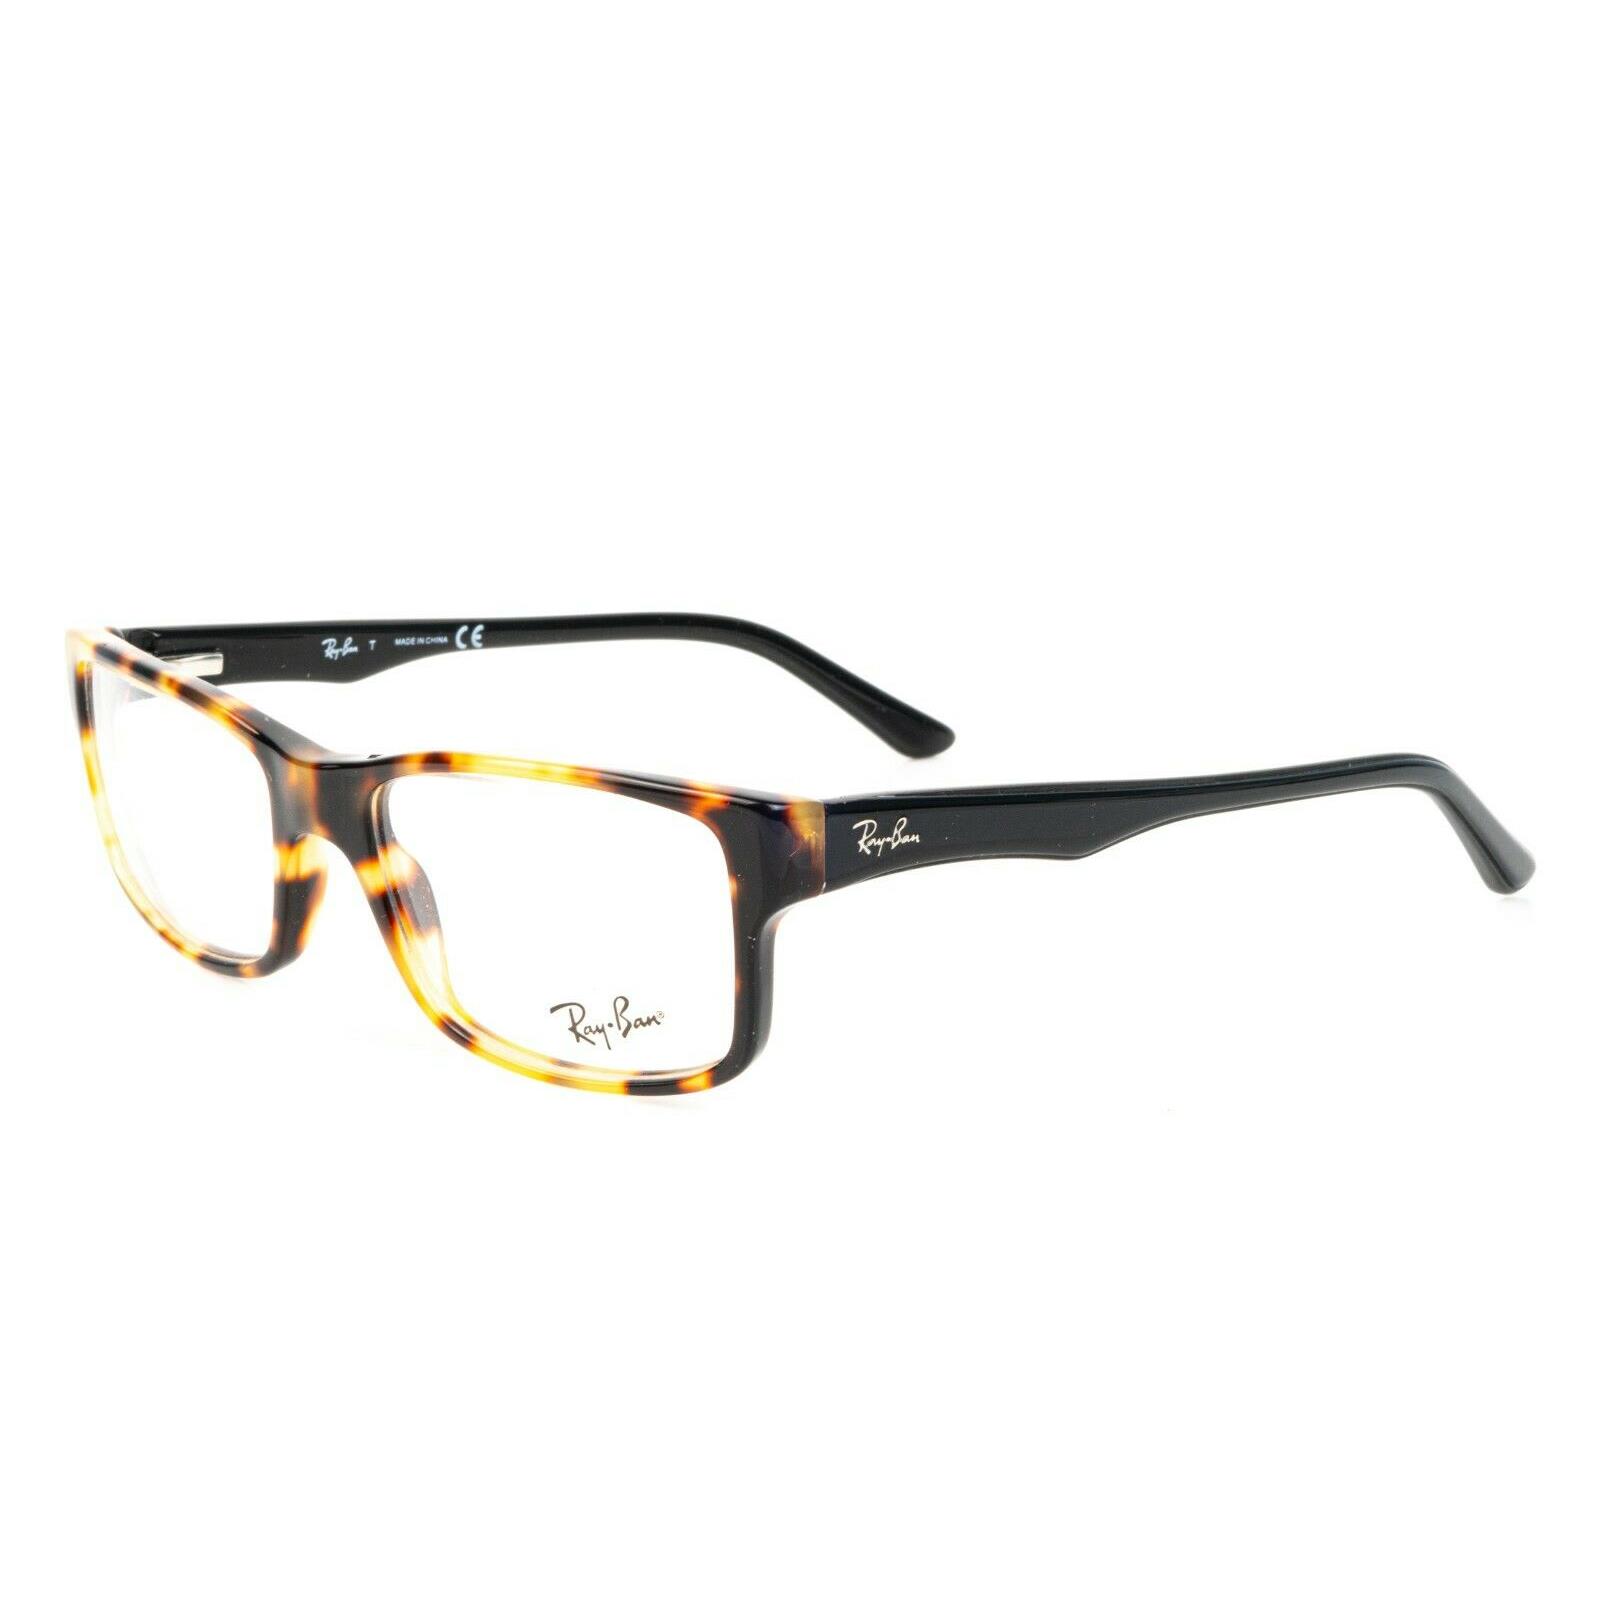 Ray-ban Ray Ban RB5245 5608 Havana Eyeglasses Frame RX 52-17 5245